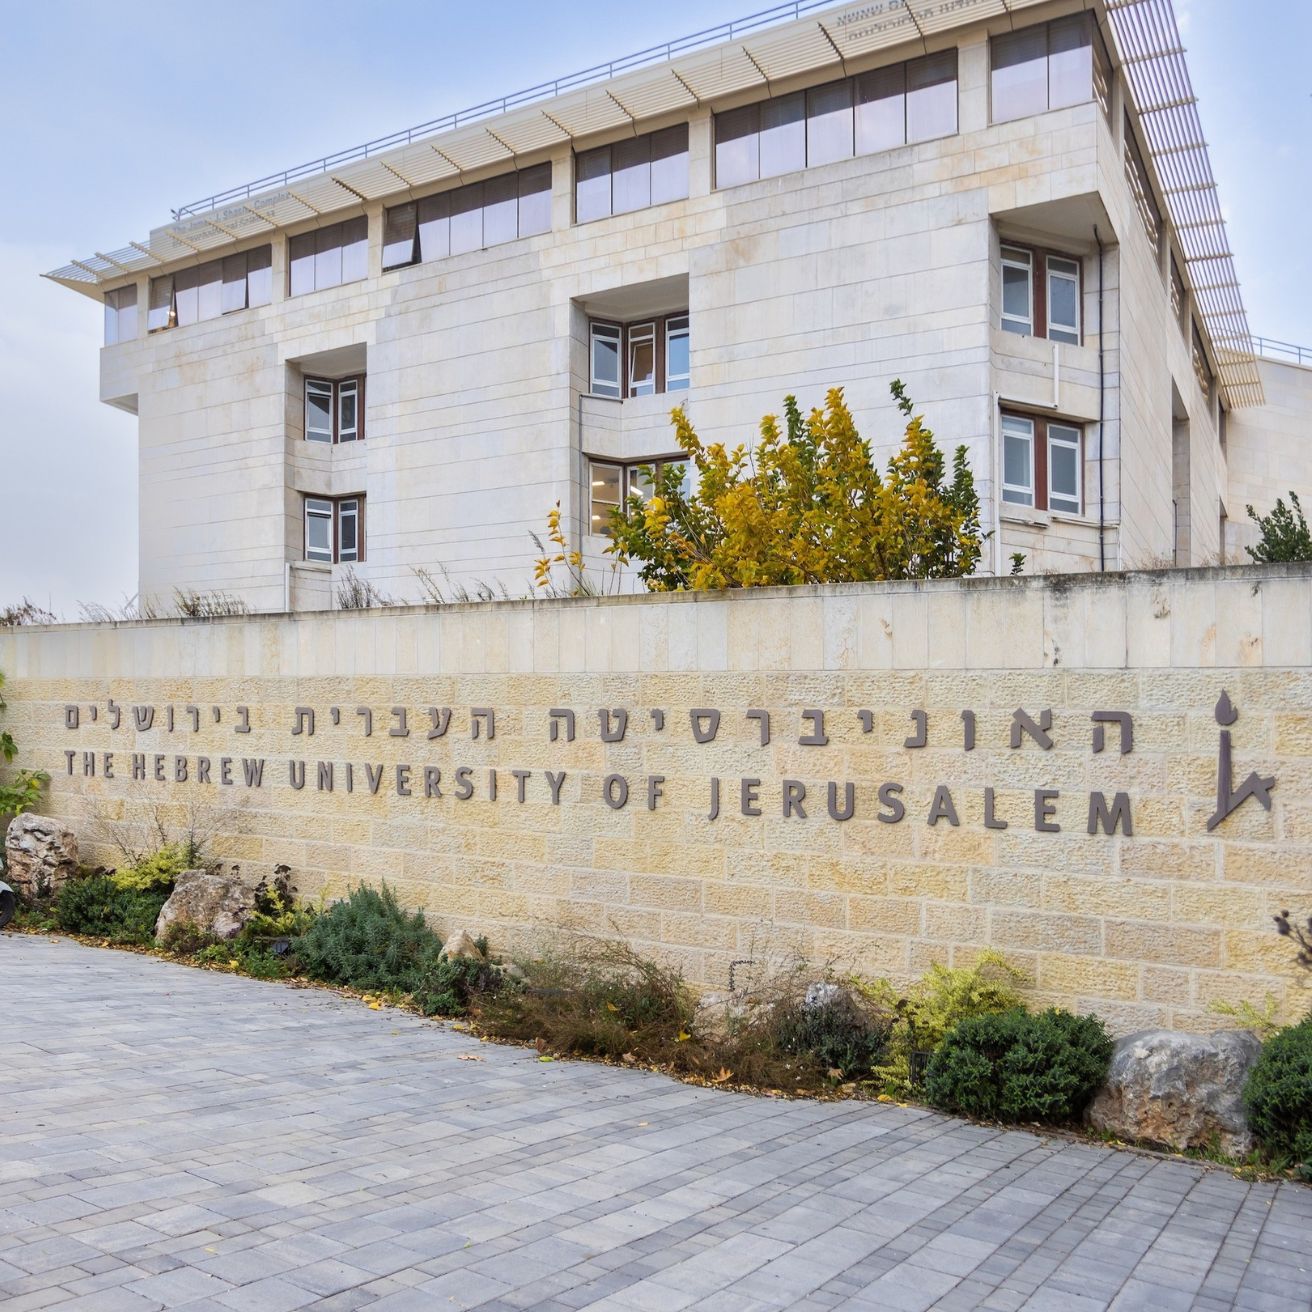 The Hebrew University of Jerusalem campus